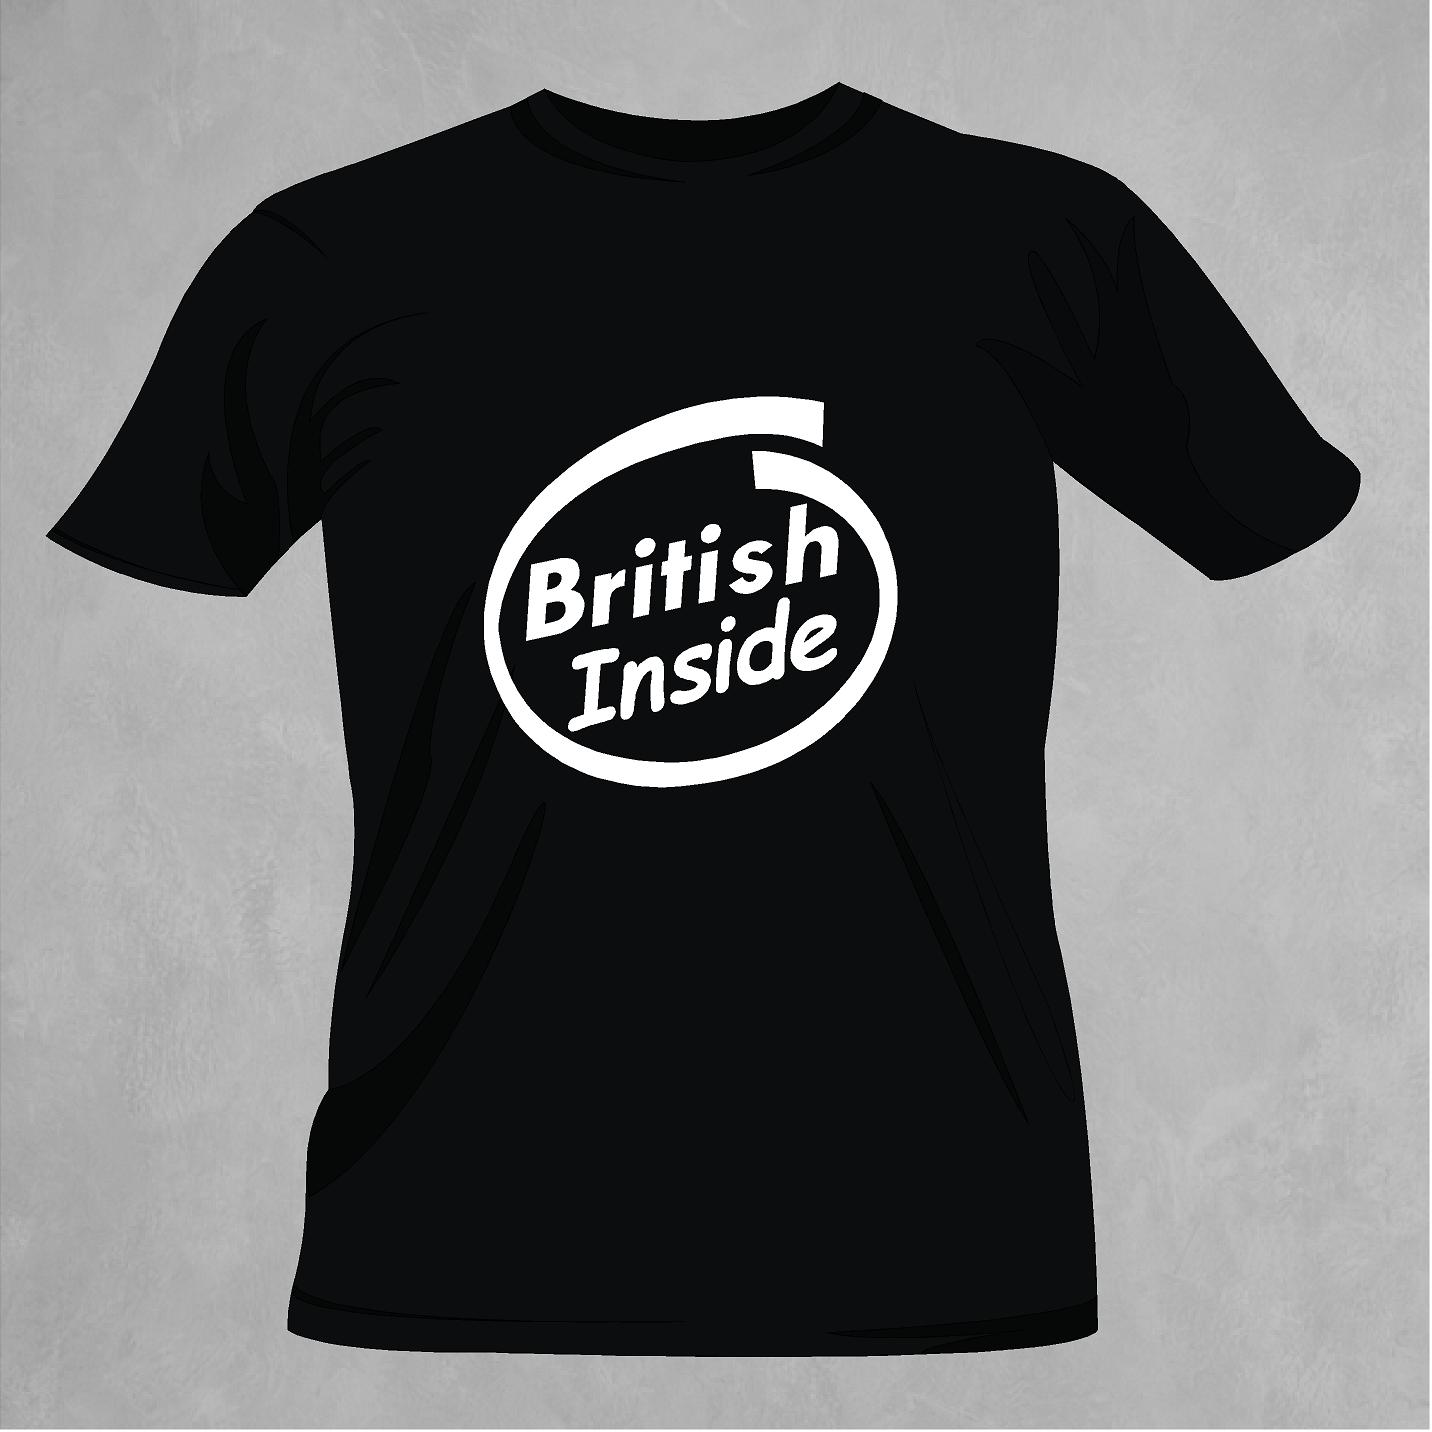 British inside